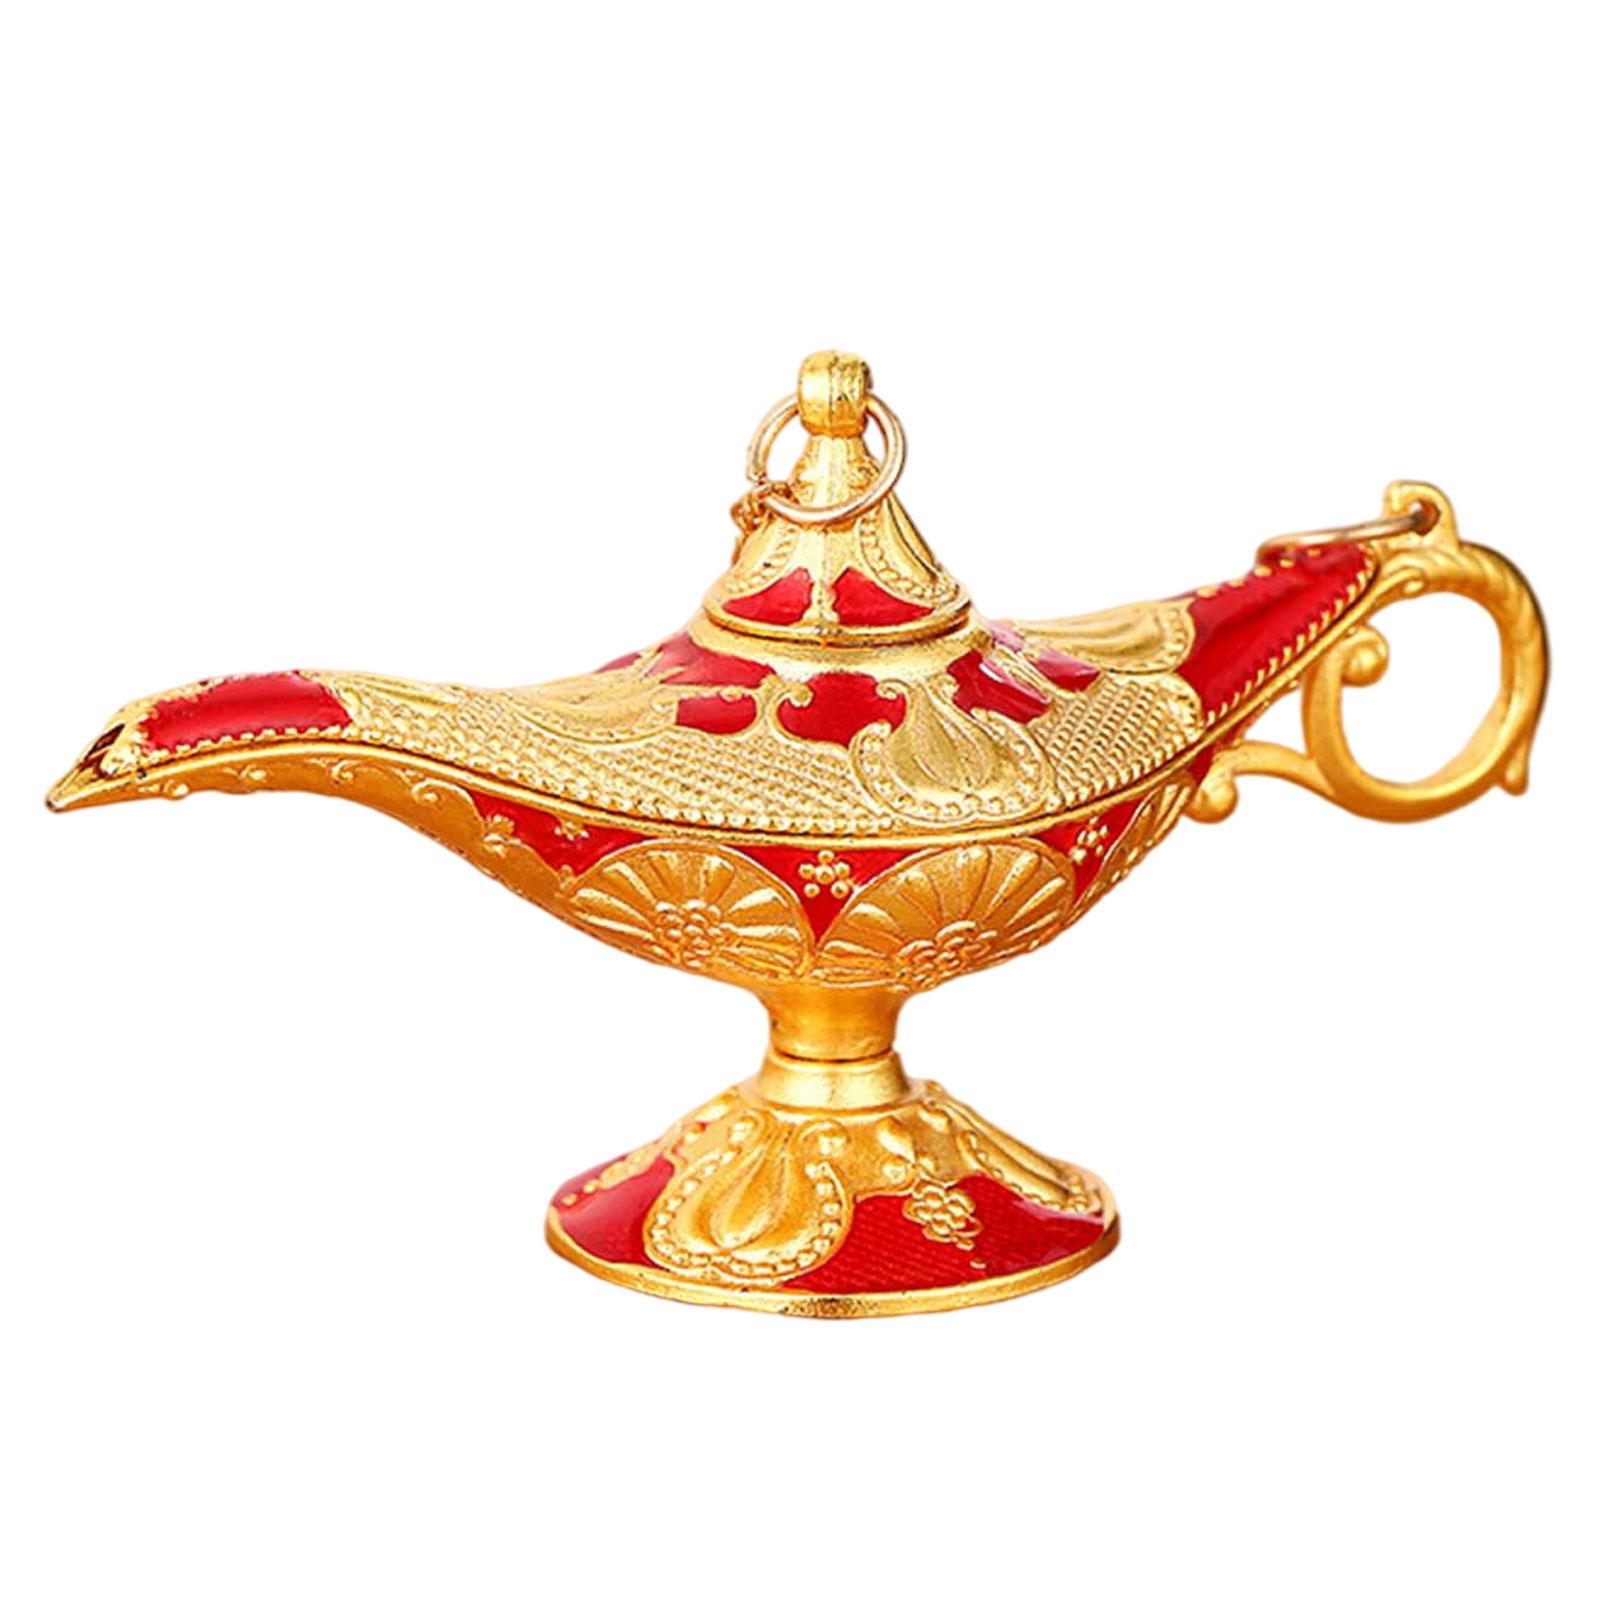 Vintage Legend Aladdin Lamp Magic Wishing Light Decoration&Gift for Christmas 